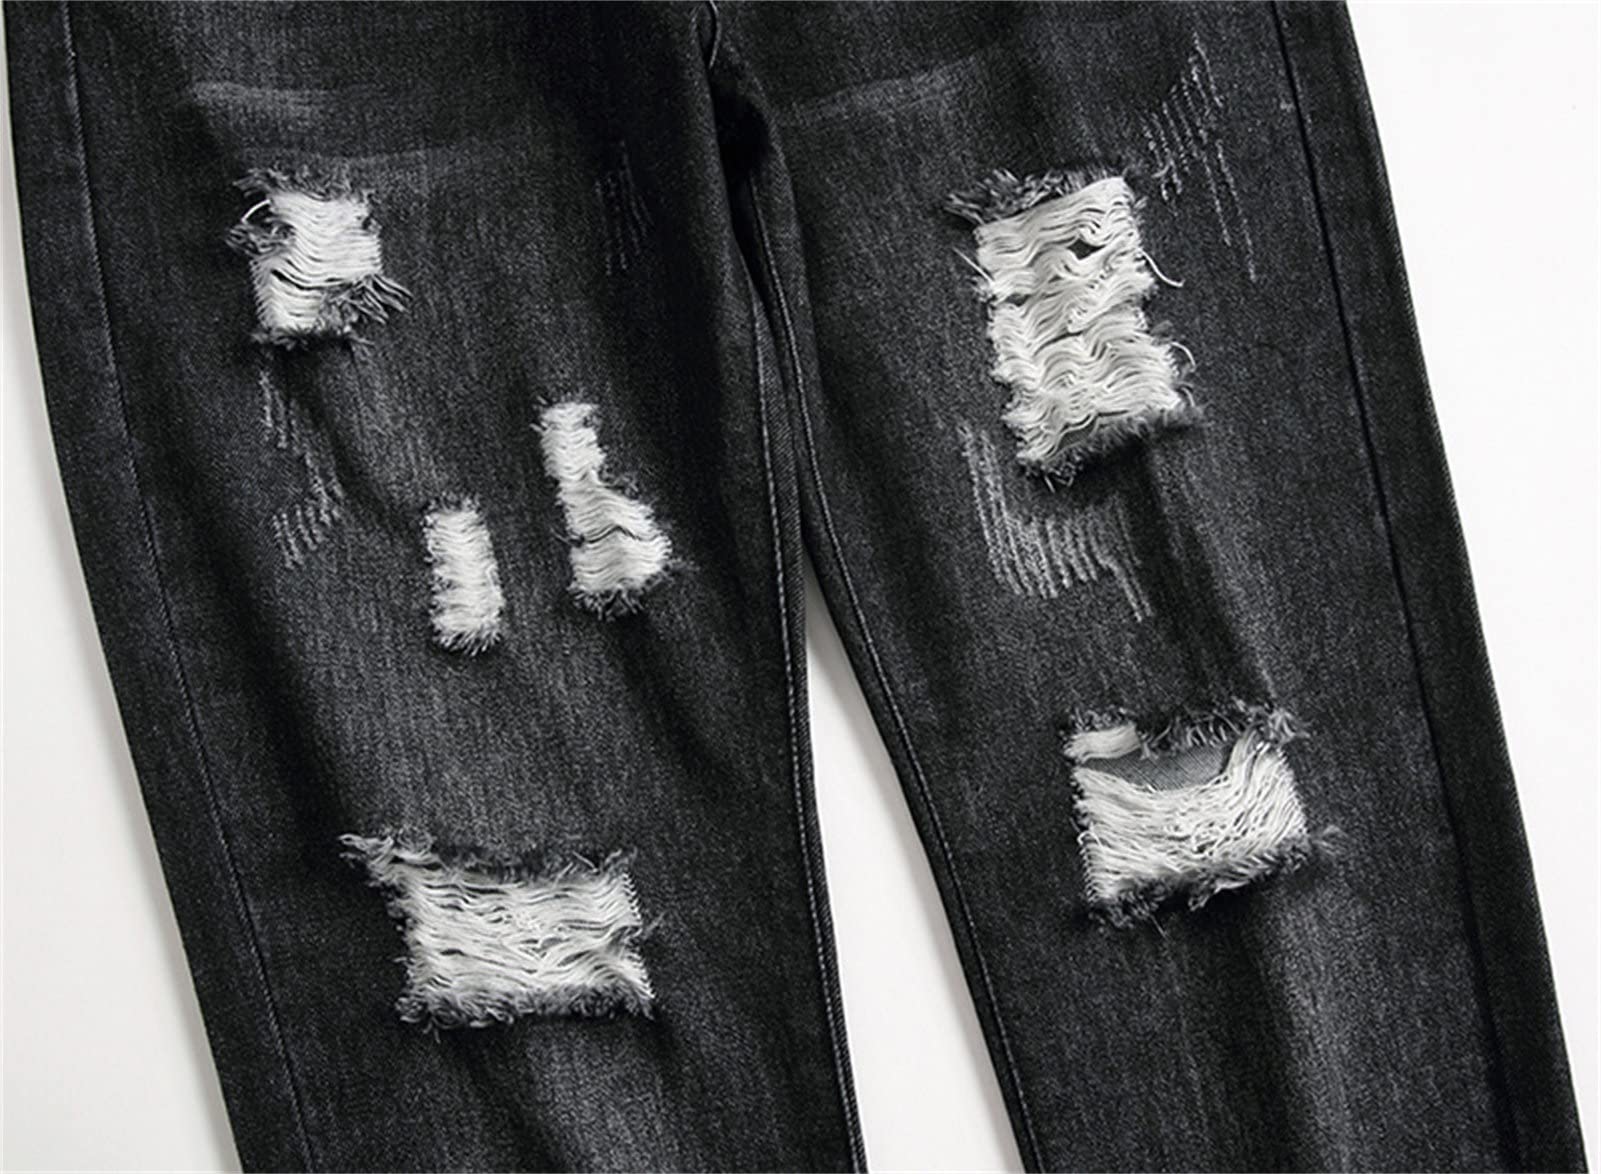 Men's Ripped Washed Slim Fit Jeans Straight Leg Moto Biker Denim Pants Vintage Distressed Skinny Jean Trousers (Black,32)